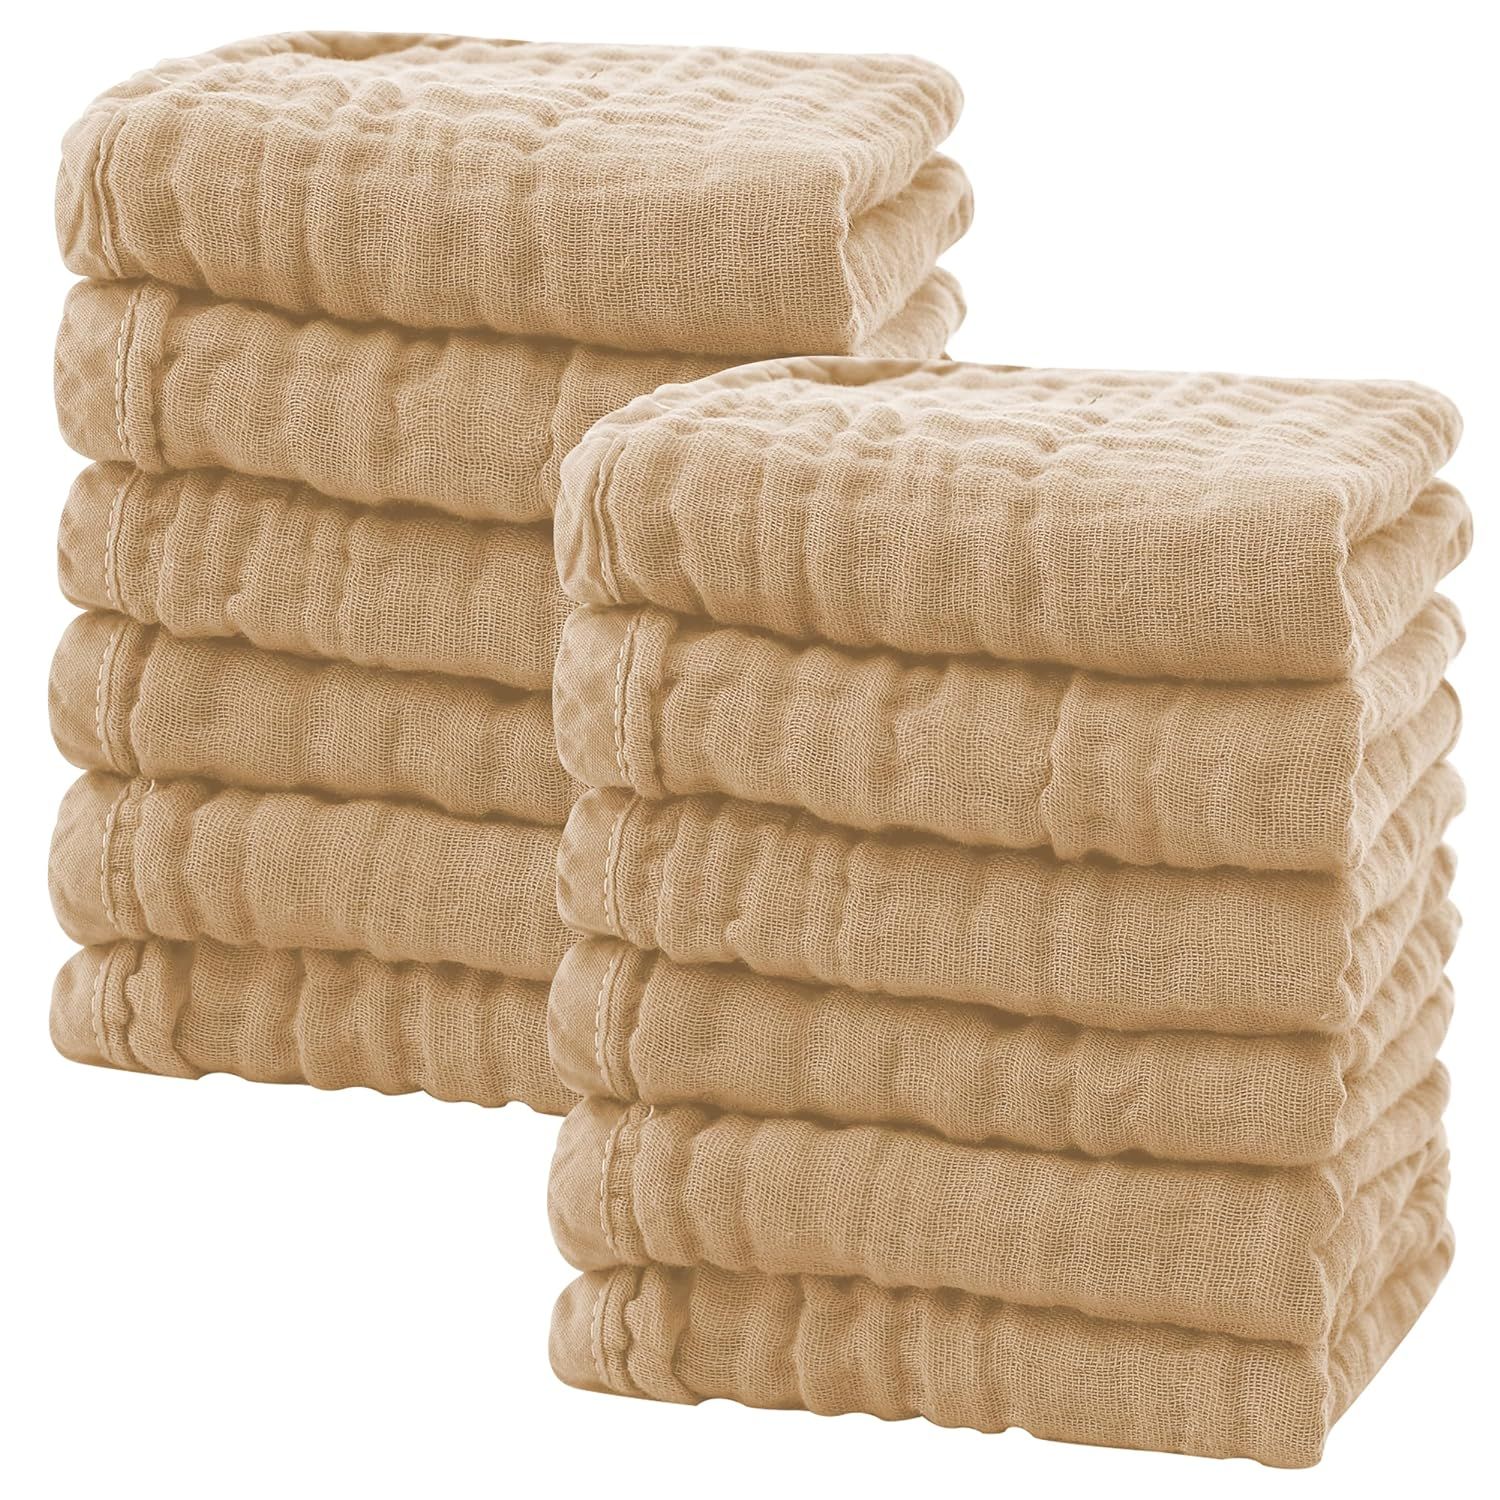 SWEET DOLPHIN 12 Pack Baby Muslin Washcloths - Soft Face Cloths for Newborn, Absorbent Bath Wash ... | Amazon (US)